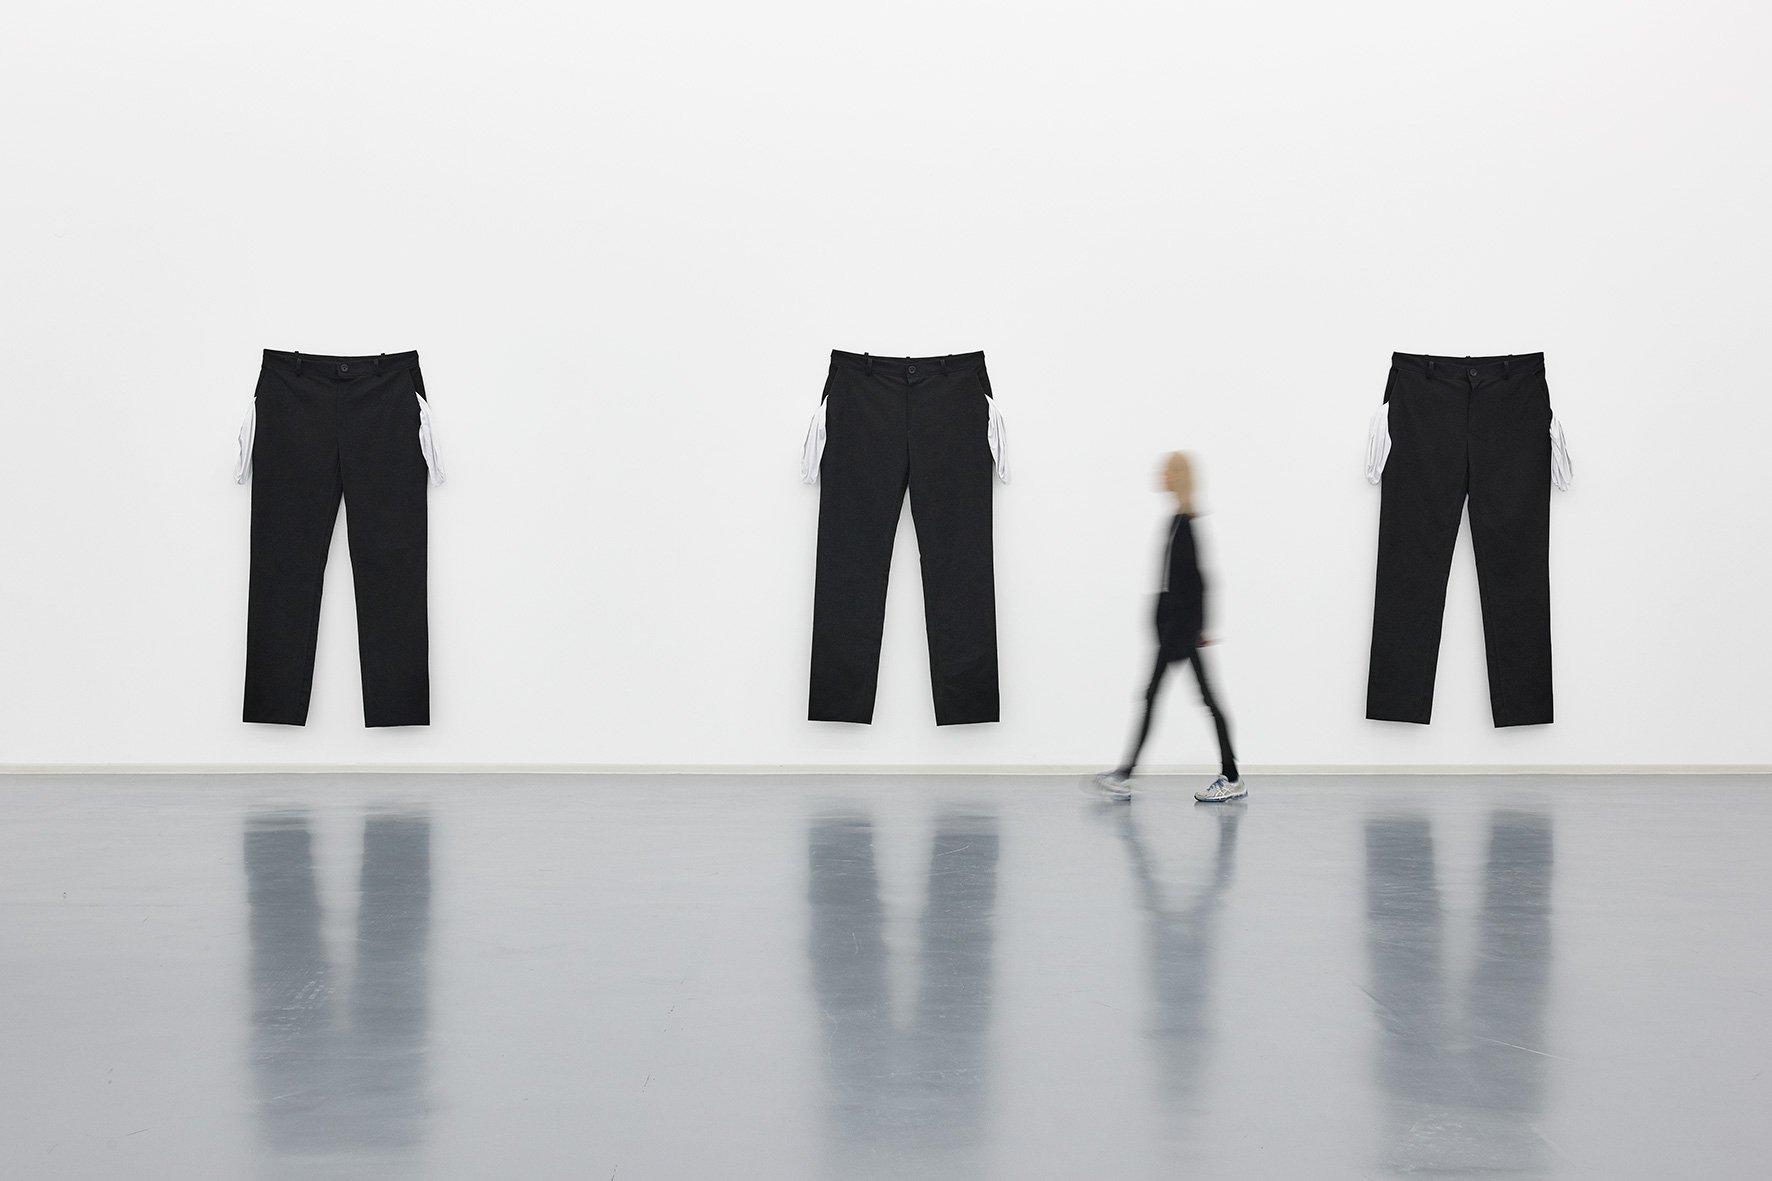 Amanda Ross-Ho, installation view, 2017, Bonner Kunstverein. Photo: Mareike Tocha